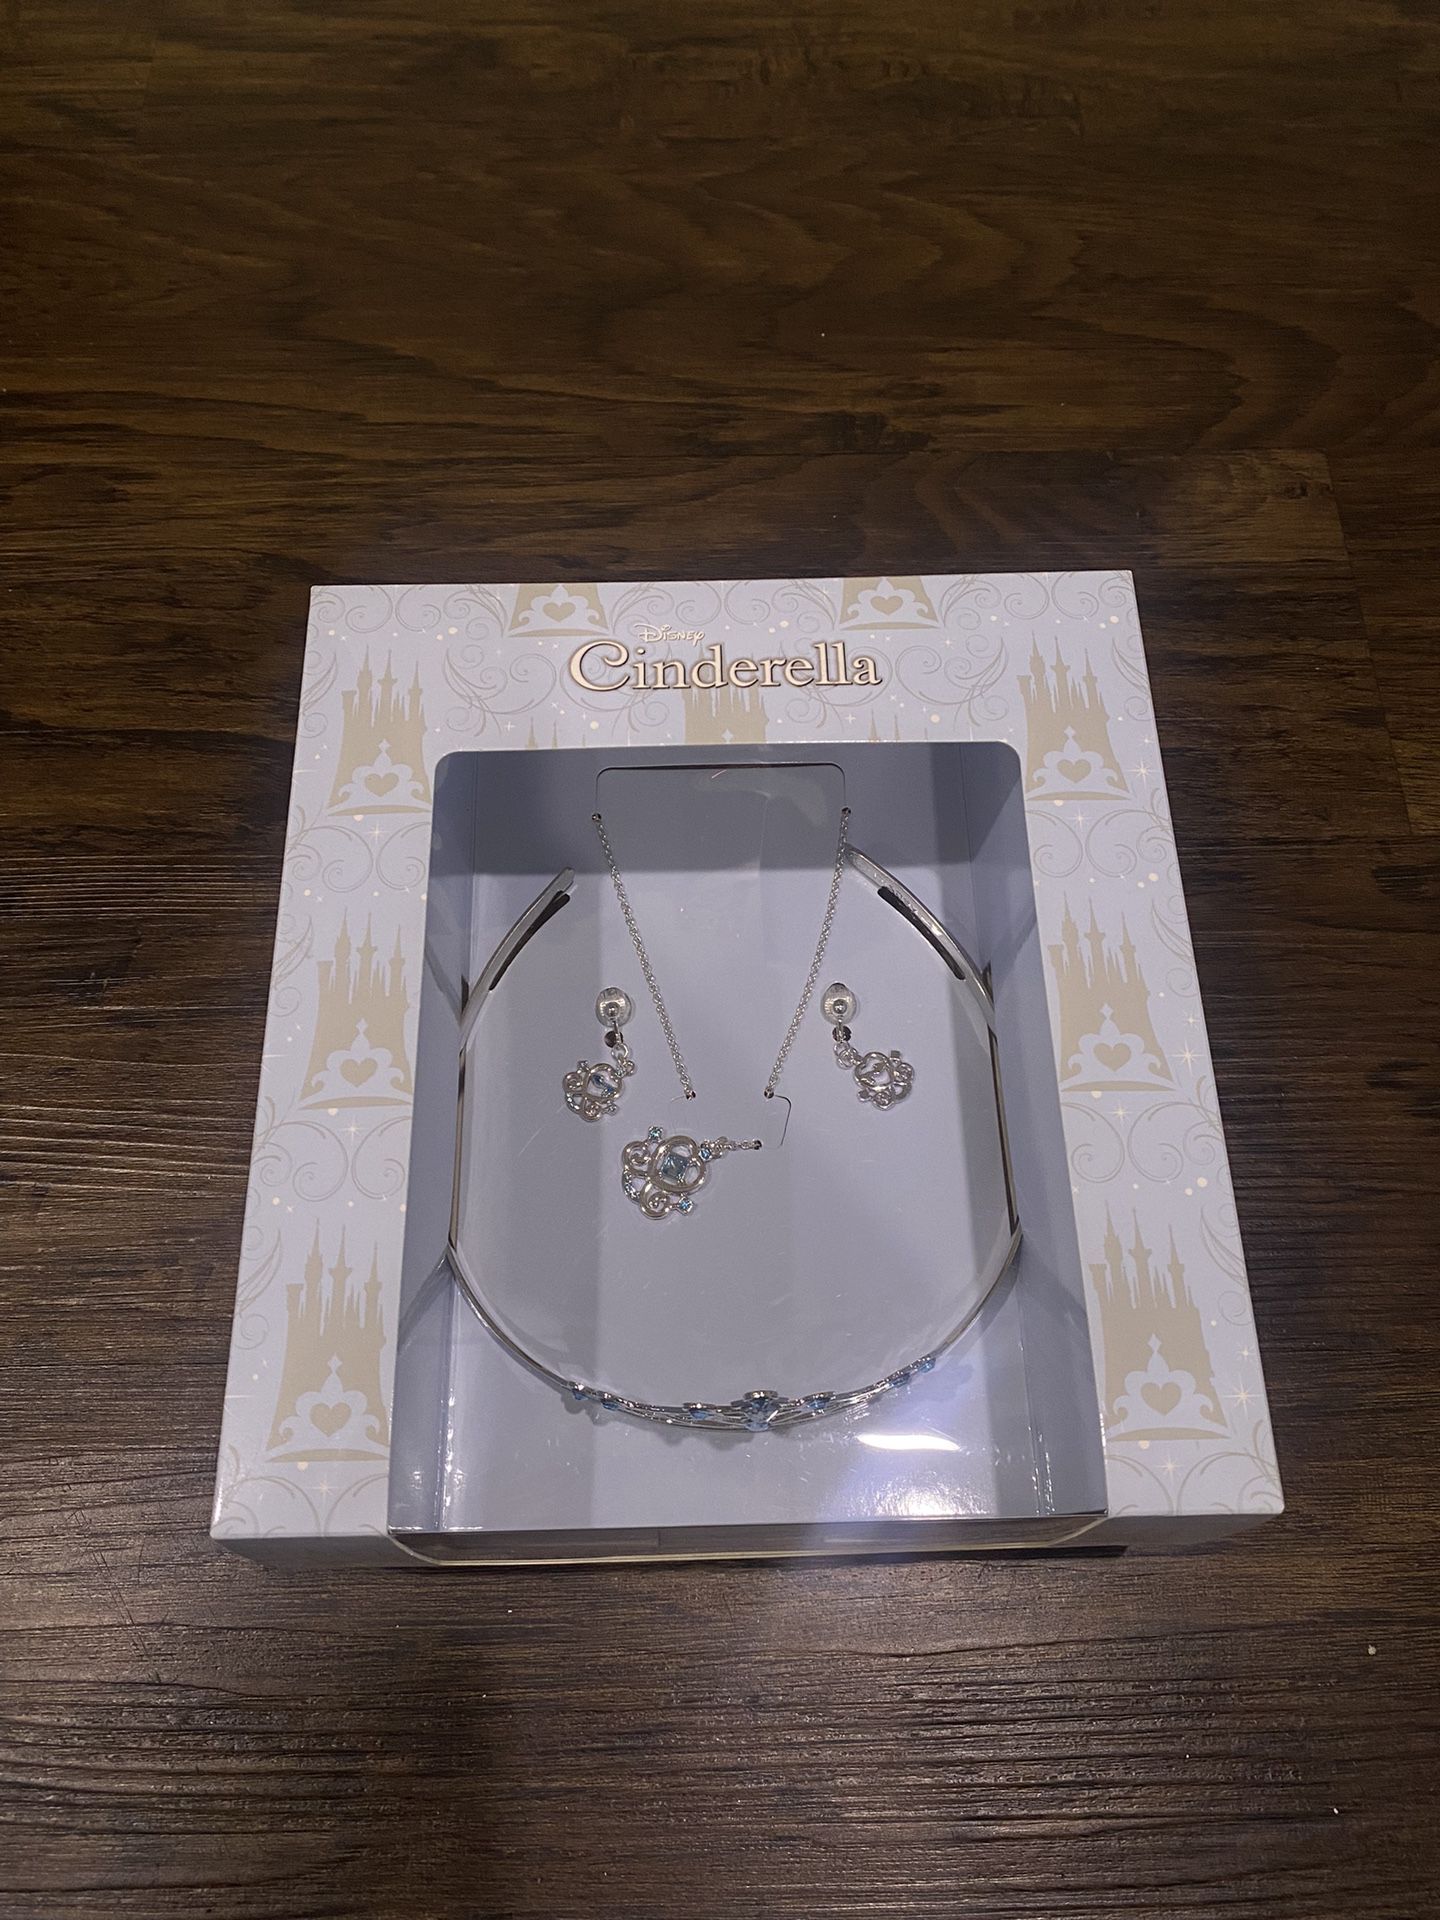 Disney+ Drop Cinderella Crown, Earrings And Necklace